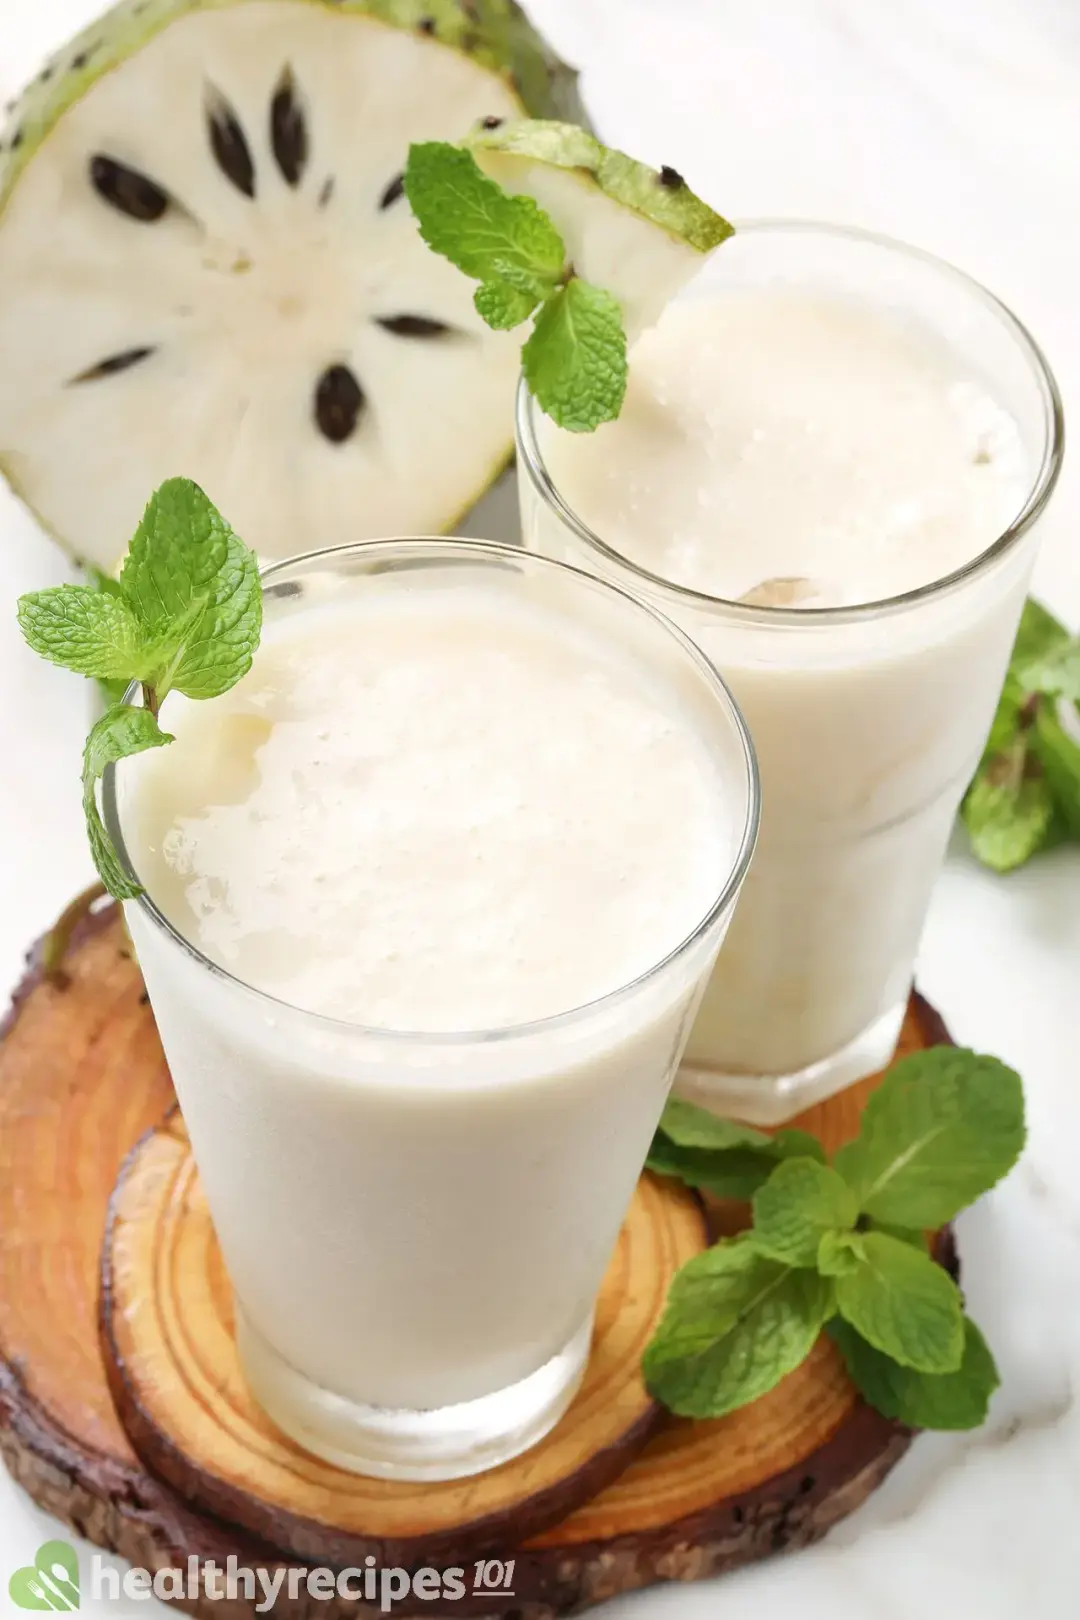 Soursop Juice Recipe: A Creamy and Healthy Drink in 15 Minutes